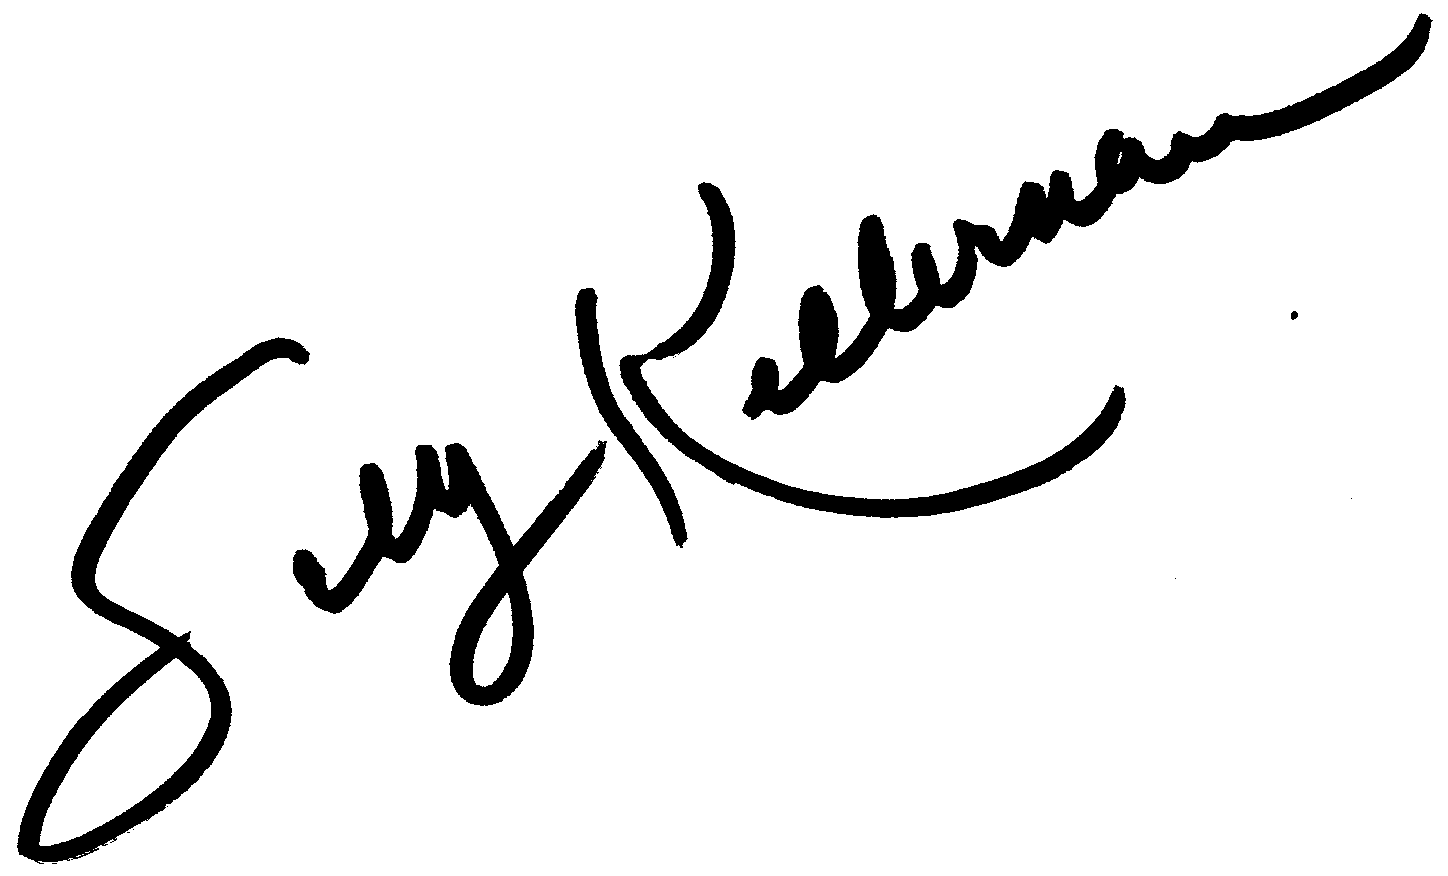 Sally Kellerman autograph facsimile